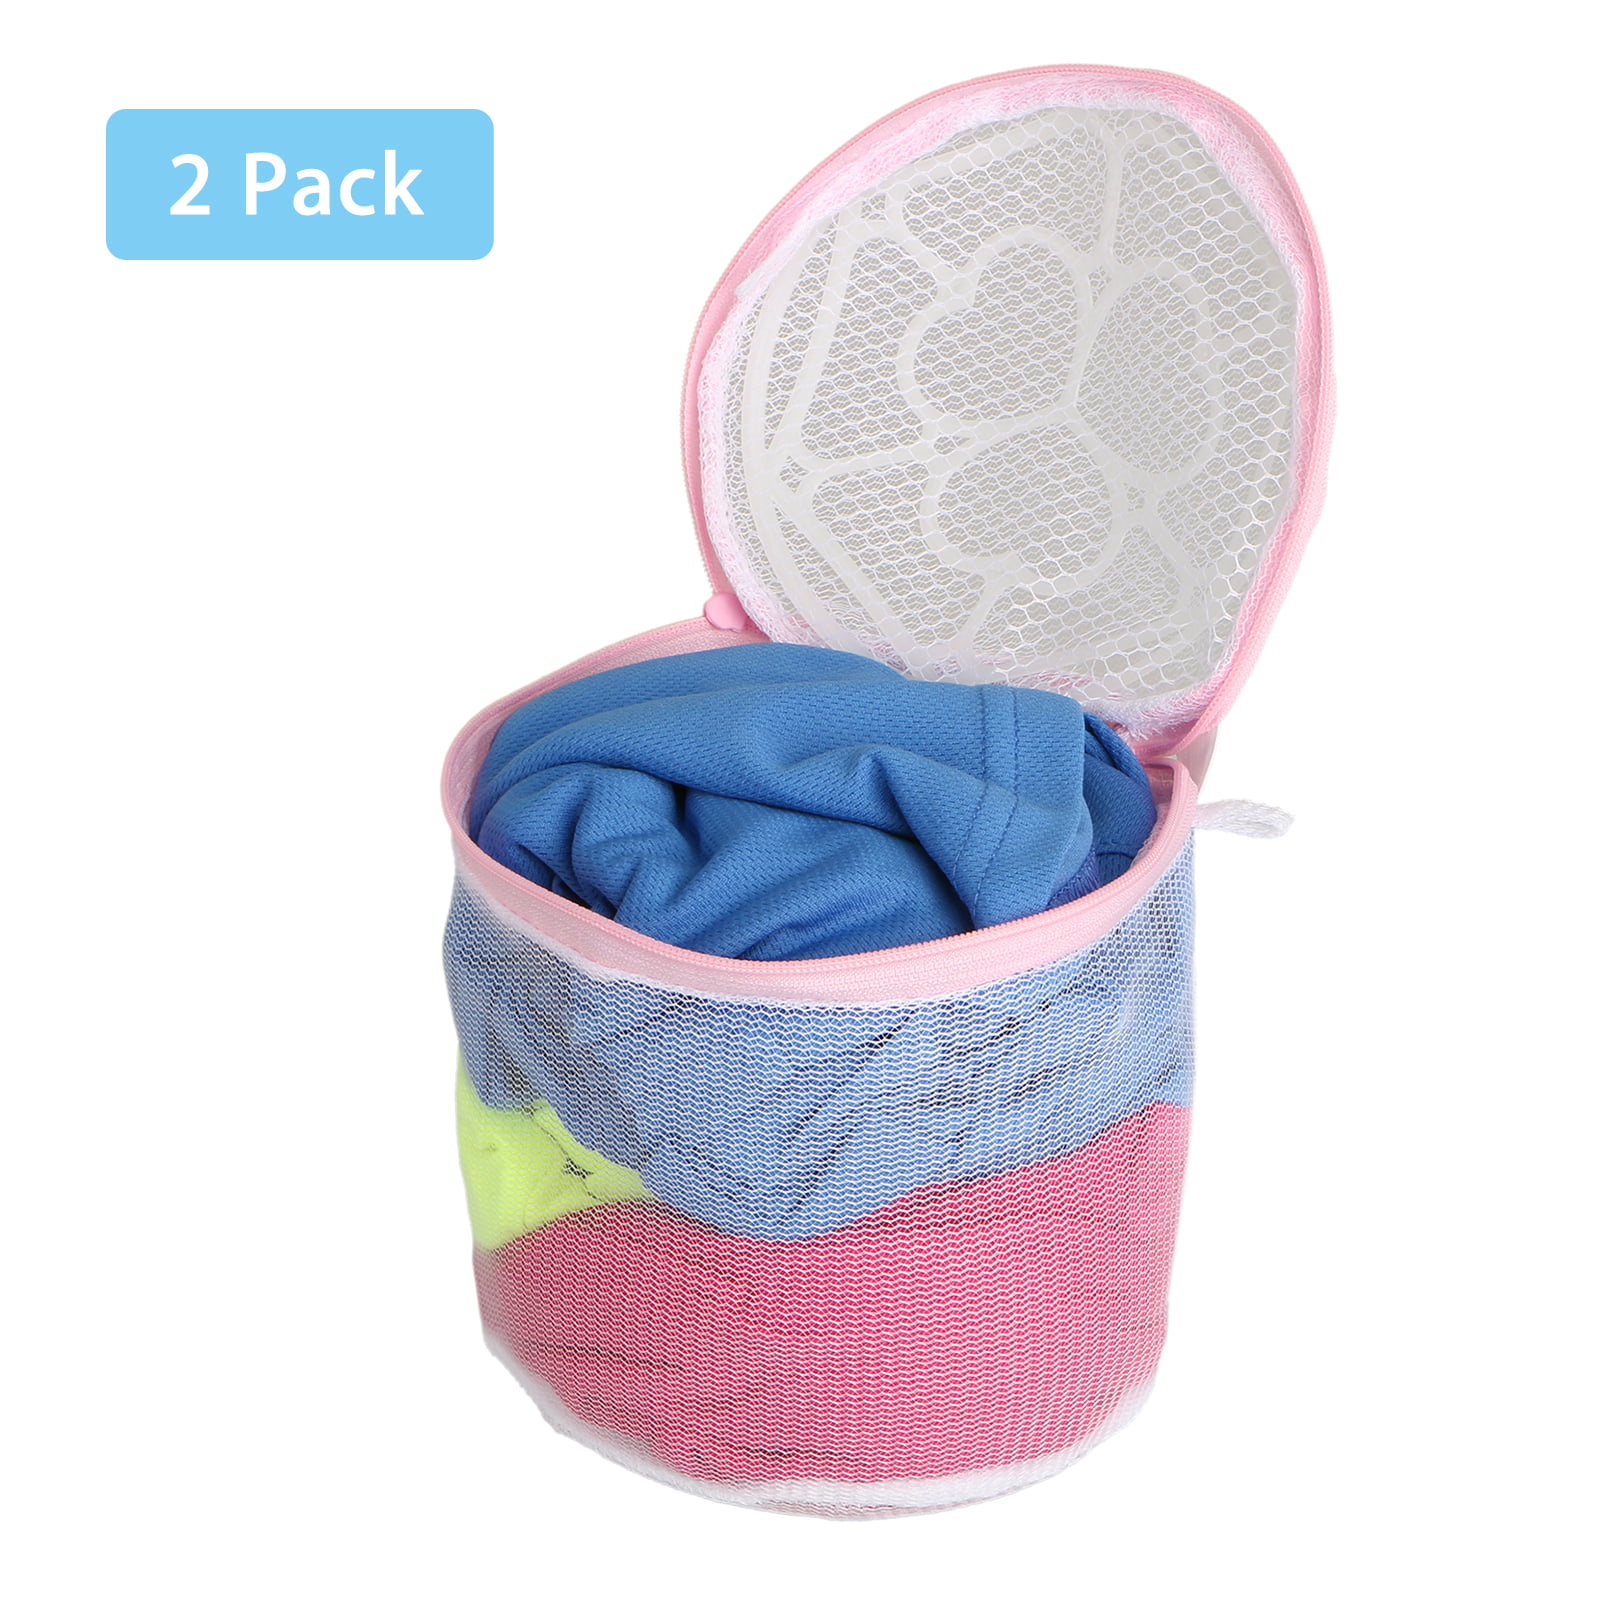 New DIY Laundry Saver Washing Machine Aid Bra Underwear Mesh Wash Basket Bag